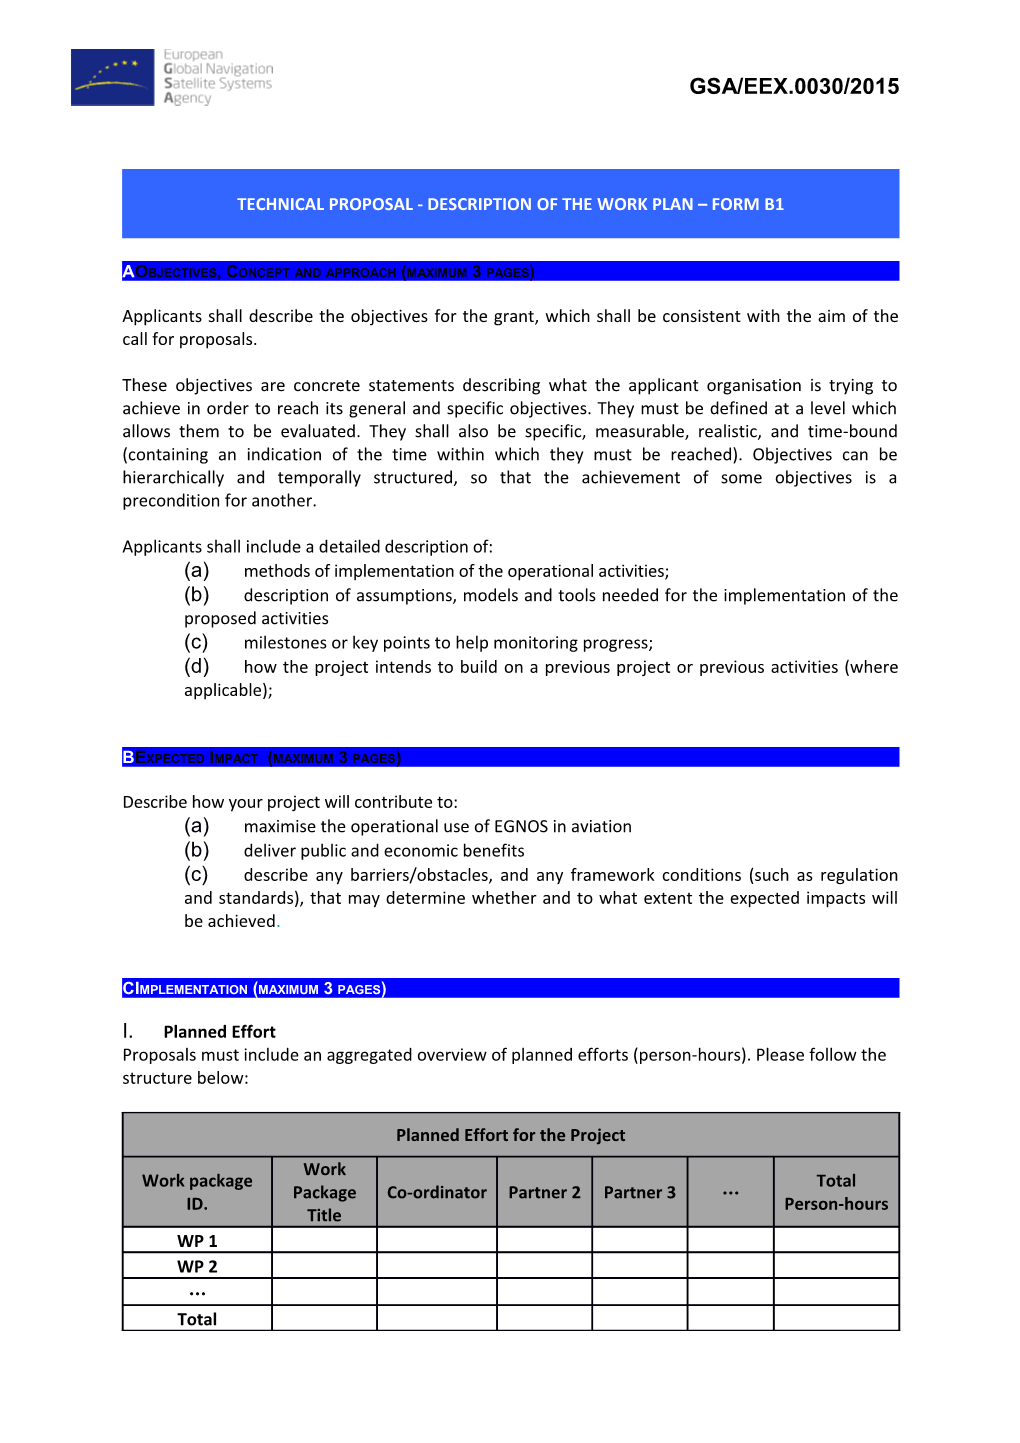 Technical Proposal - Description of the Work Plan Form B1